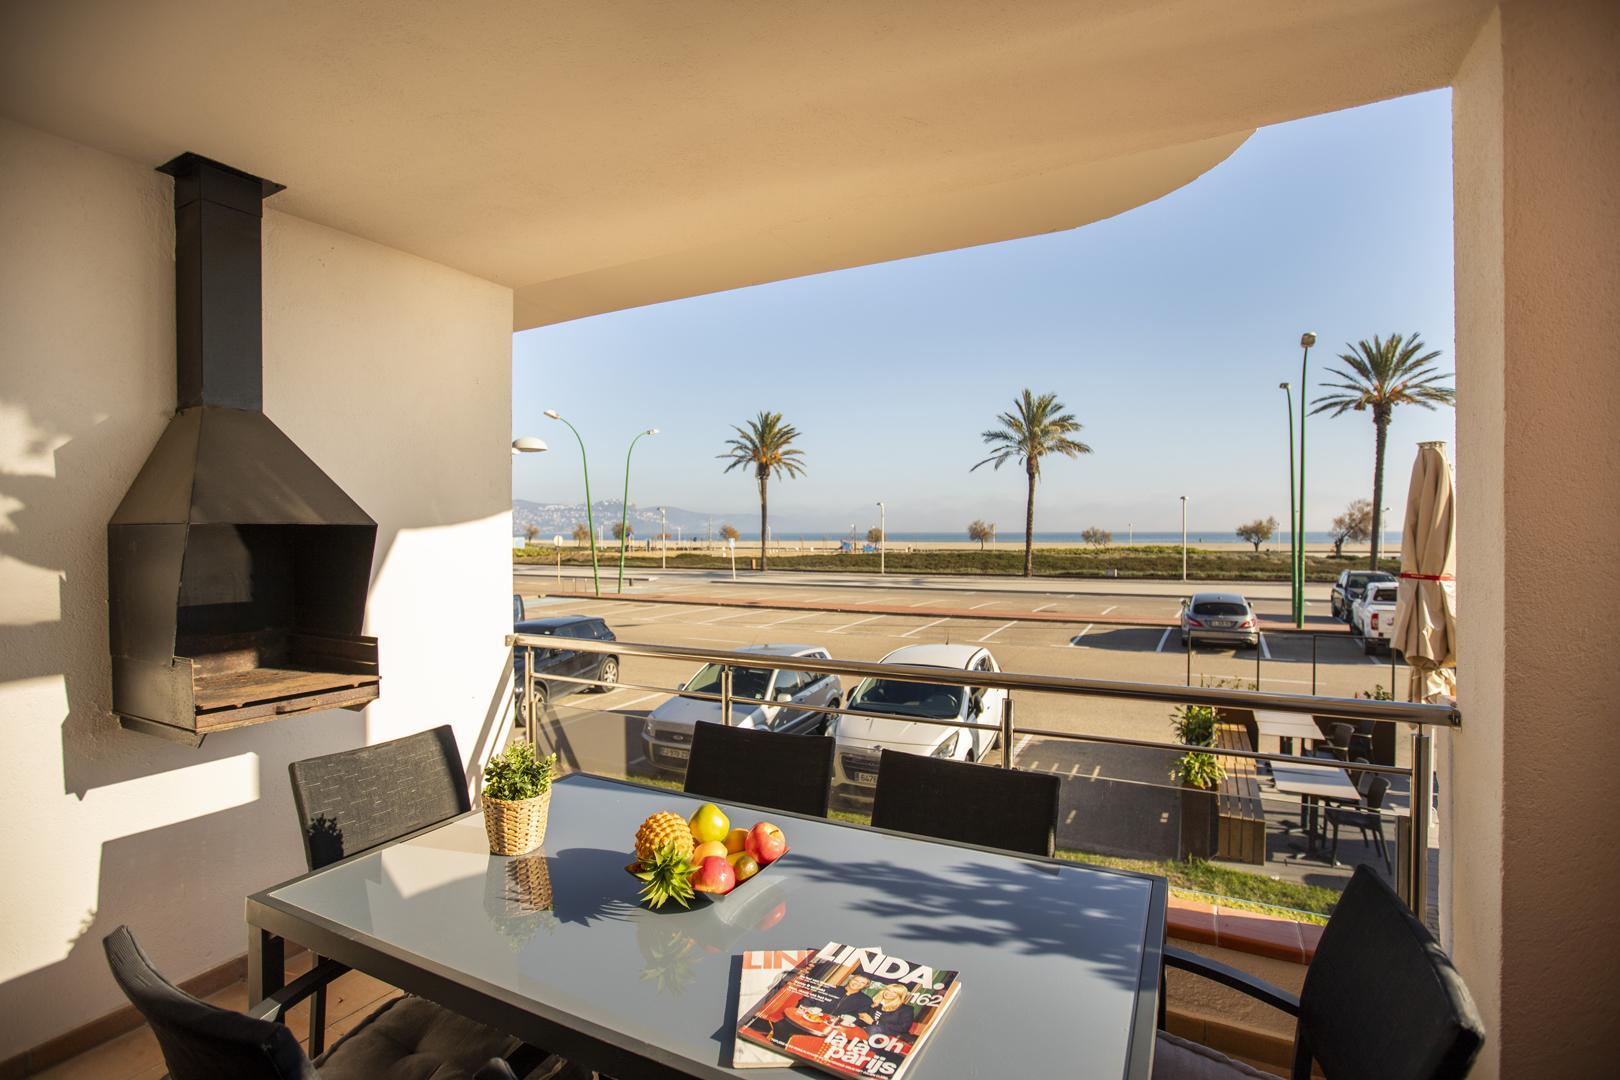 087 Apartamento de dos dormitorios vistas al mar Piso Gran Reserva Blaucel B Castelló d'Empúries